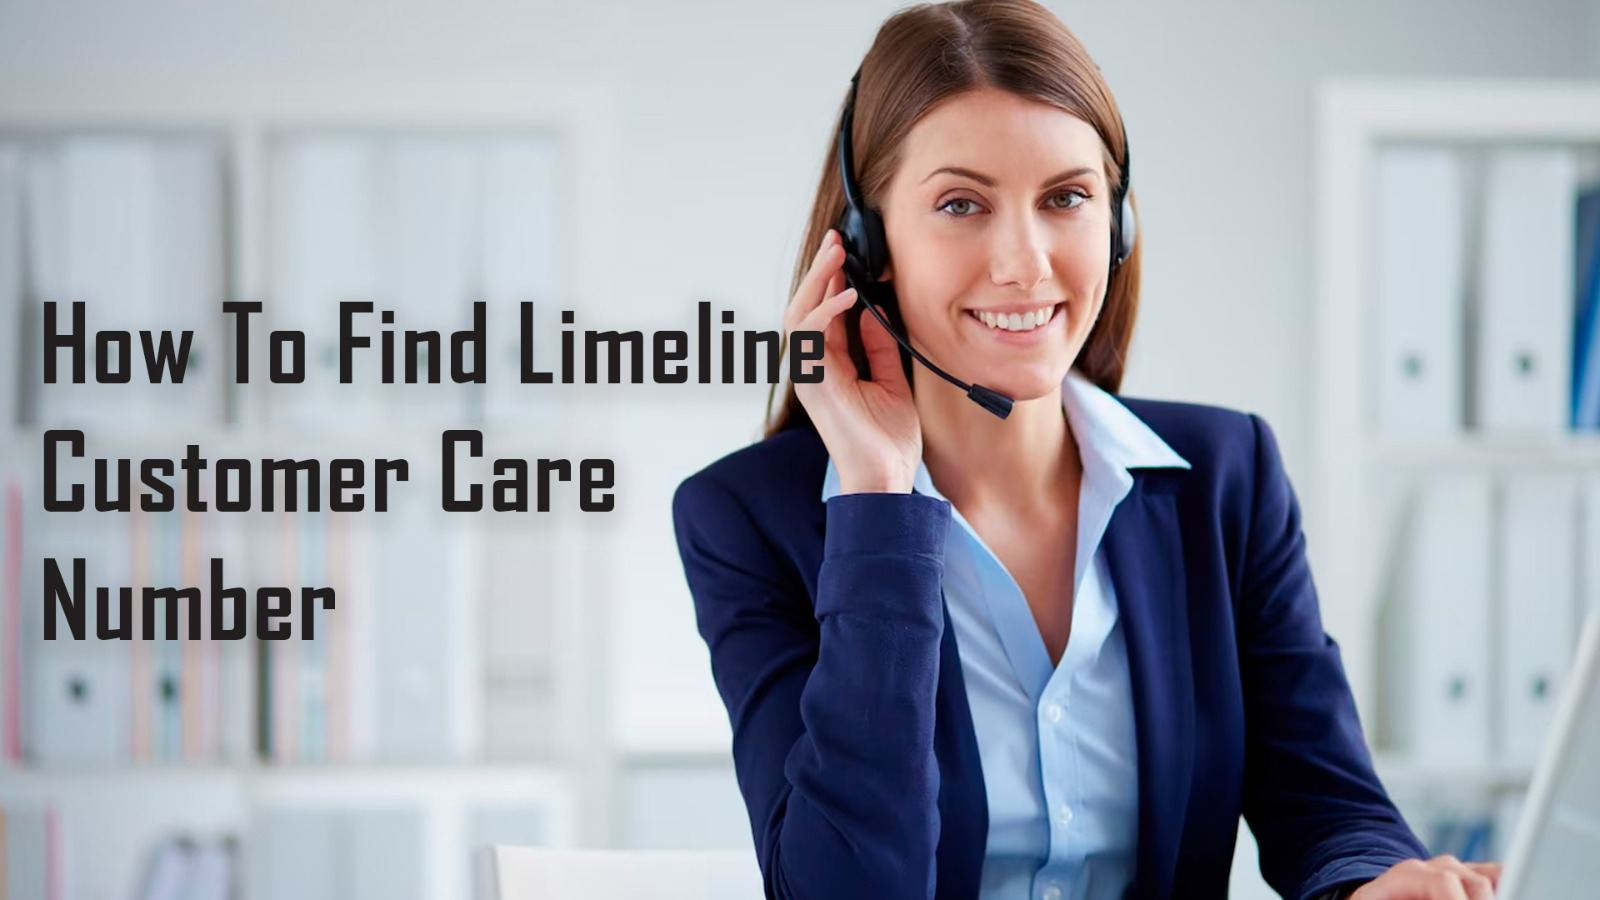 How To Find Limeline Customer Care Number